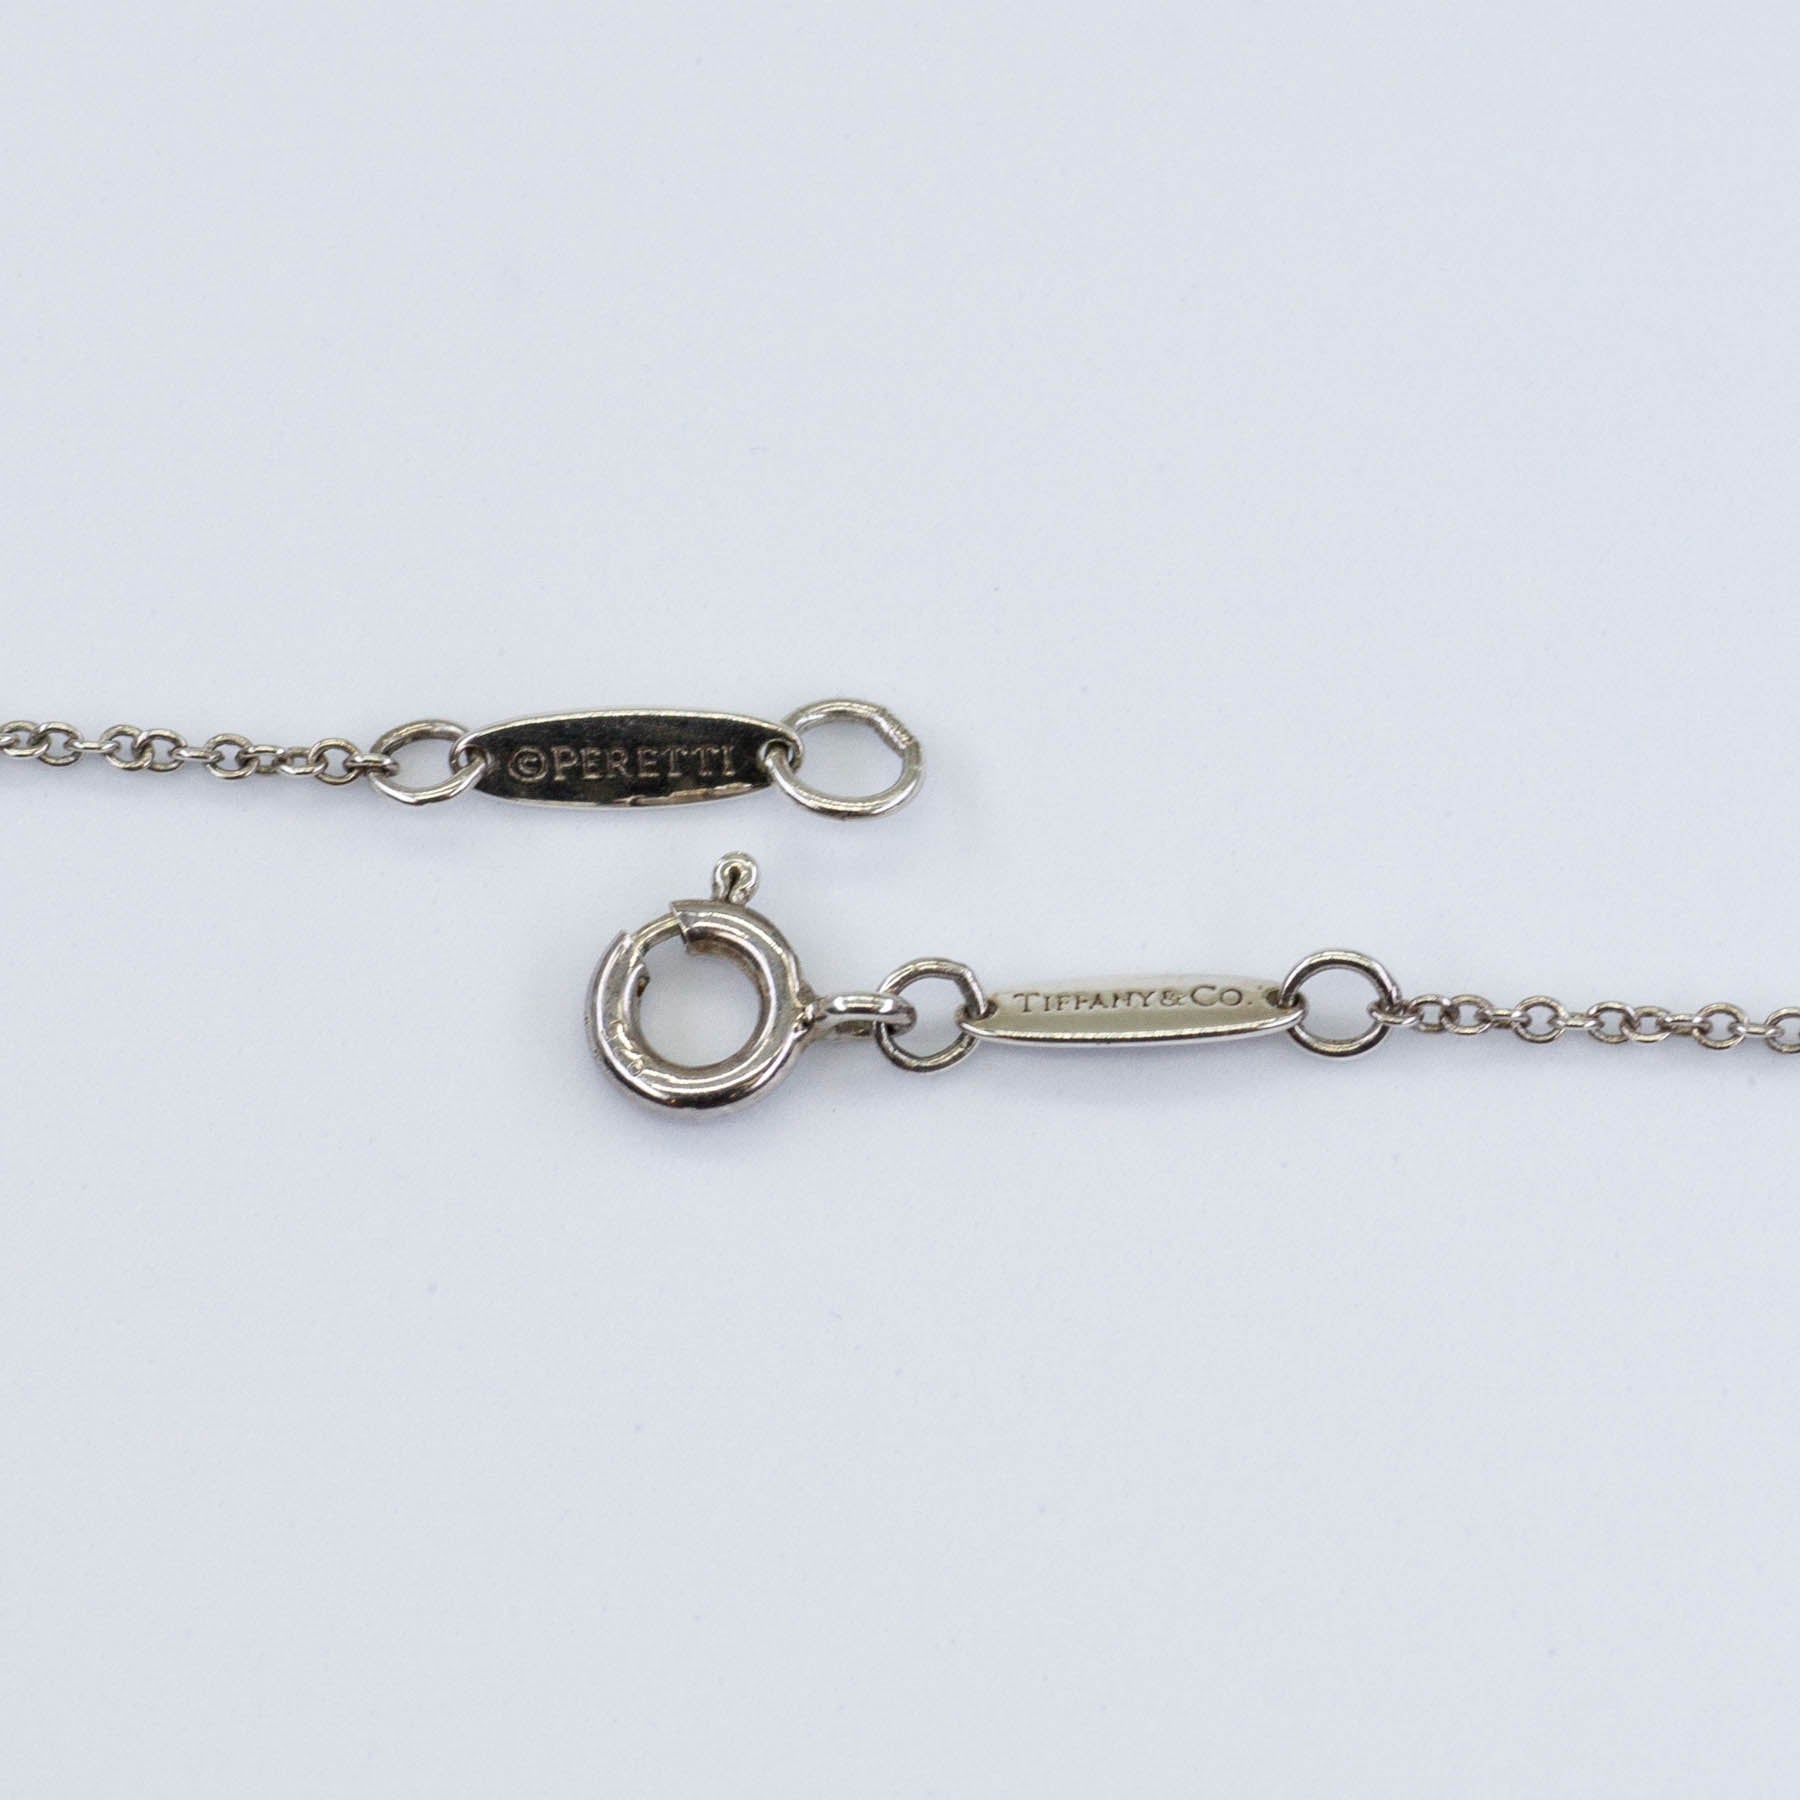 'Tiffany & Co.' Elsa Peretti Fresh Water Pearls Necklace | 16